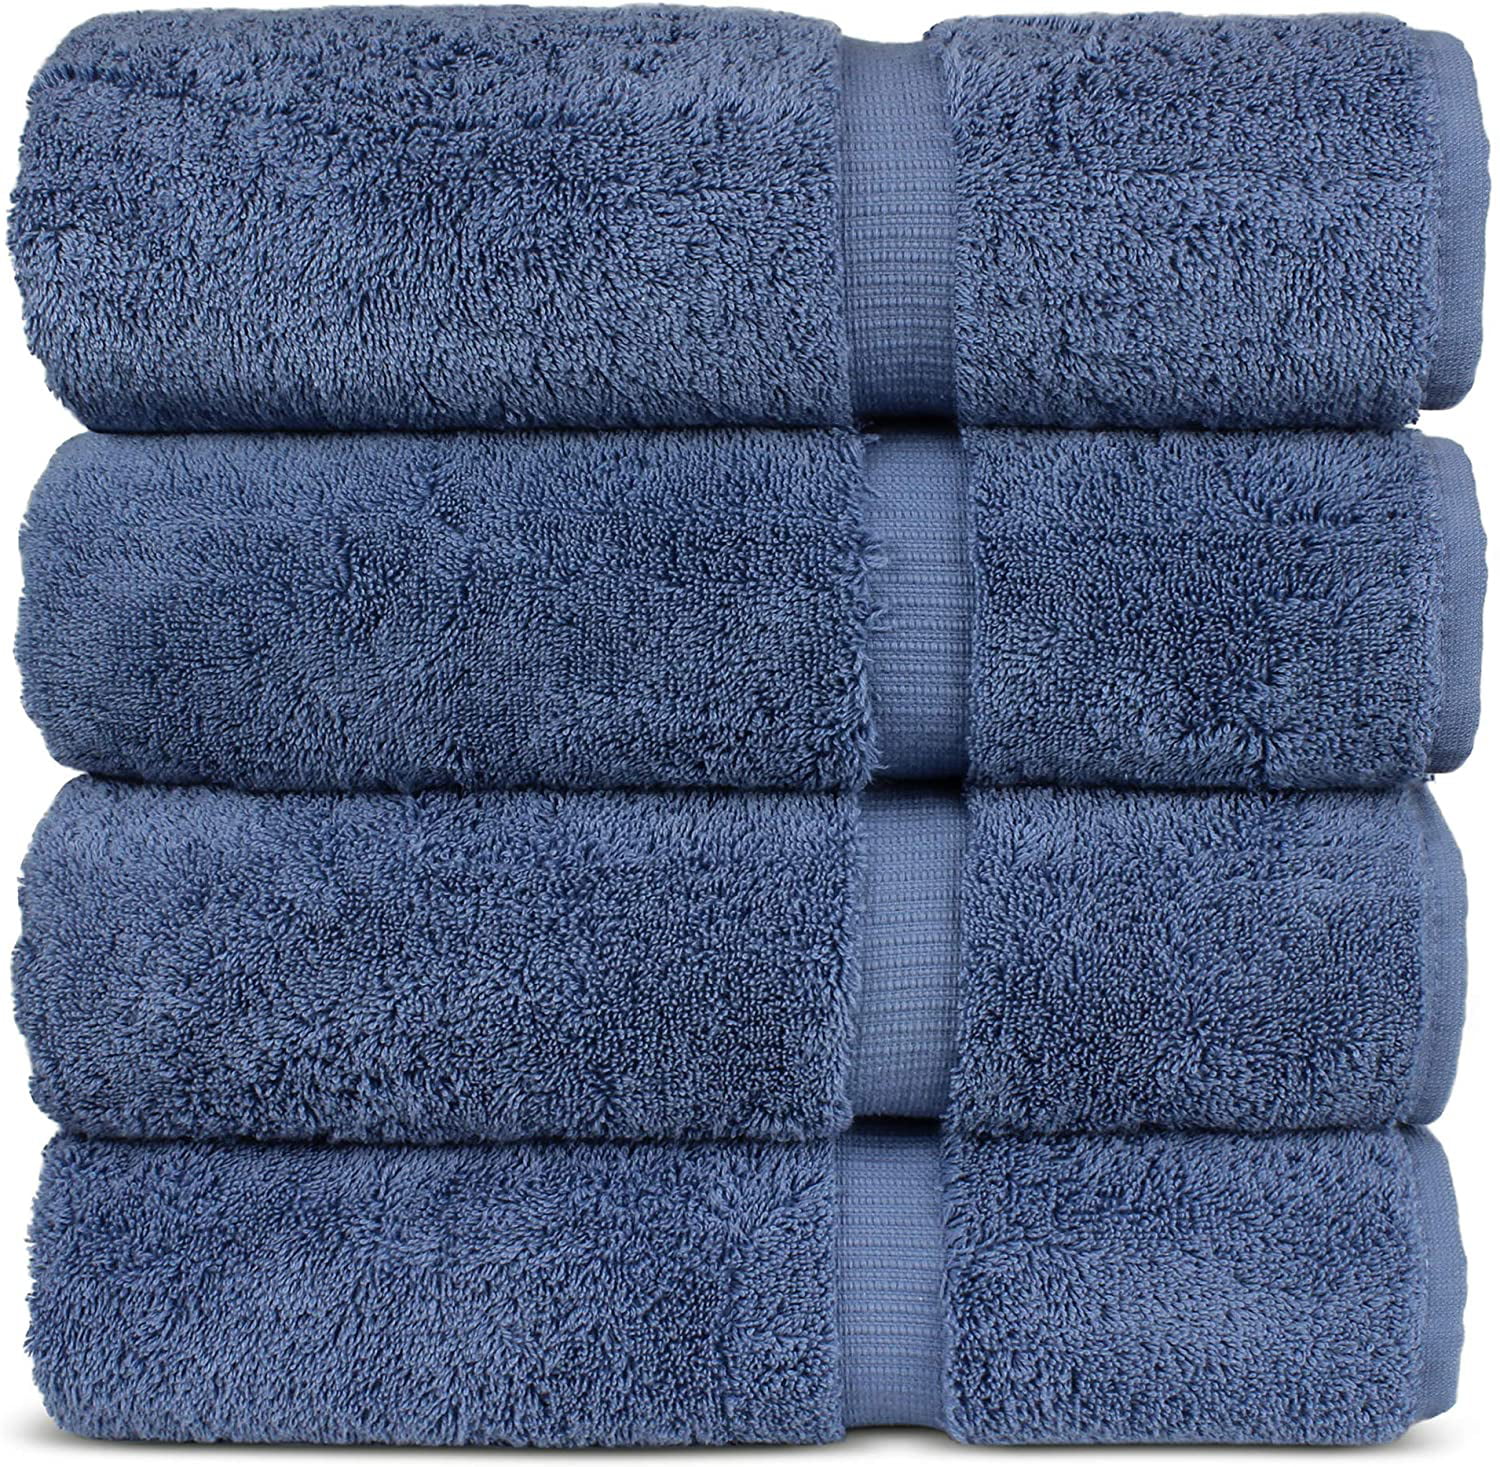 Luxury 100% Cotton Bath Towel Set.Hotel Quality.Premium Collection Bathroom.Soft 